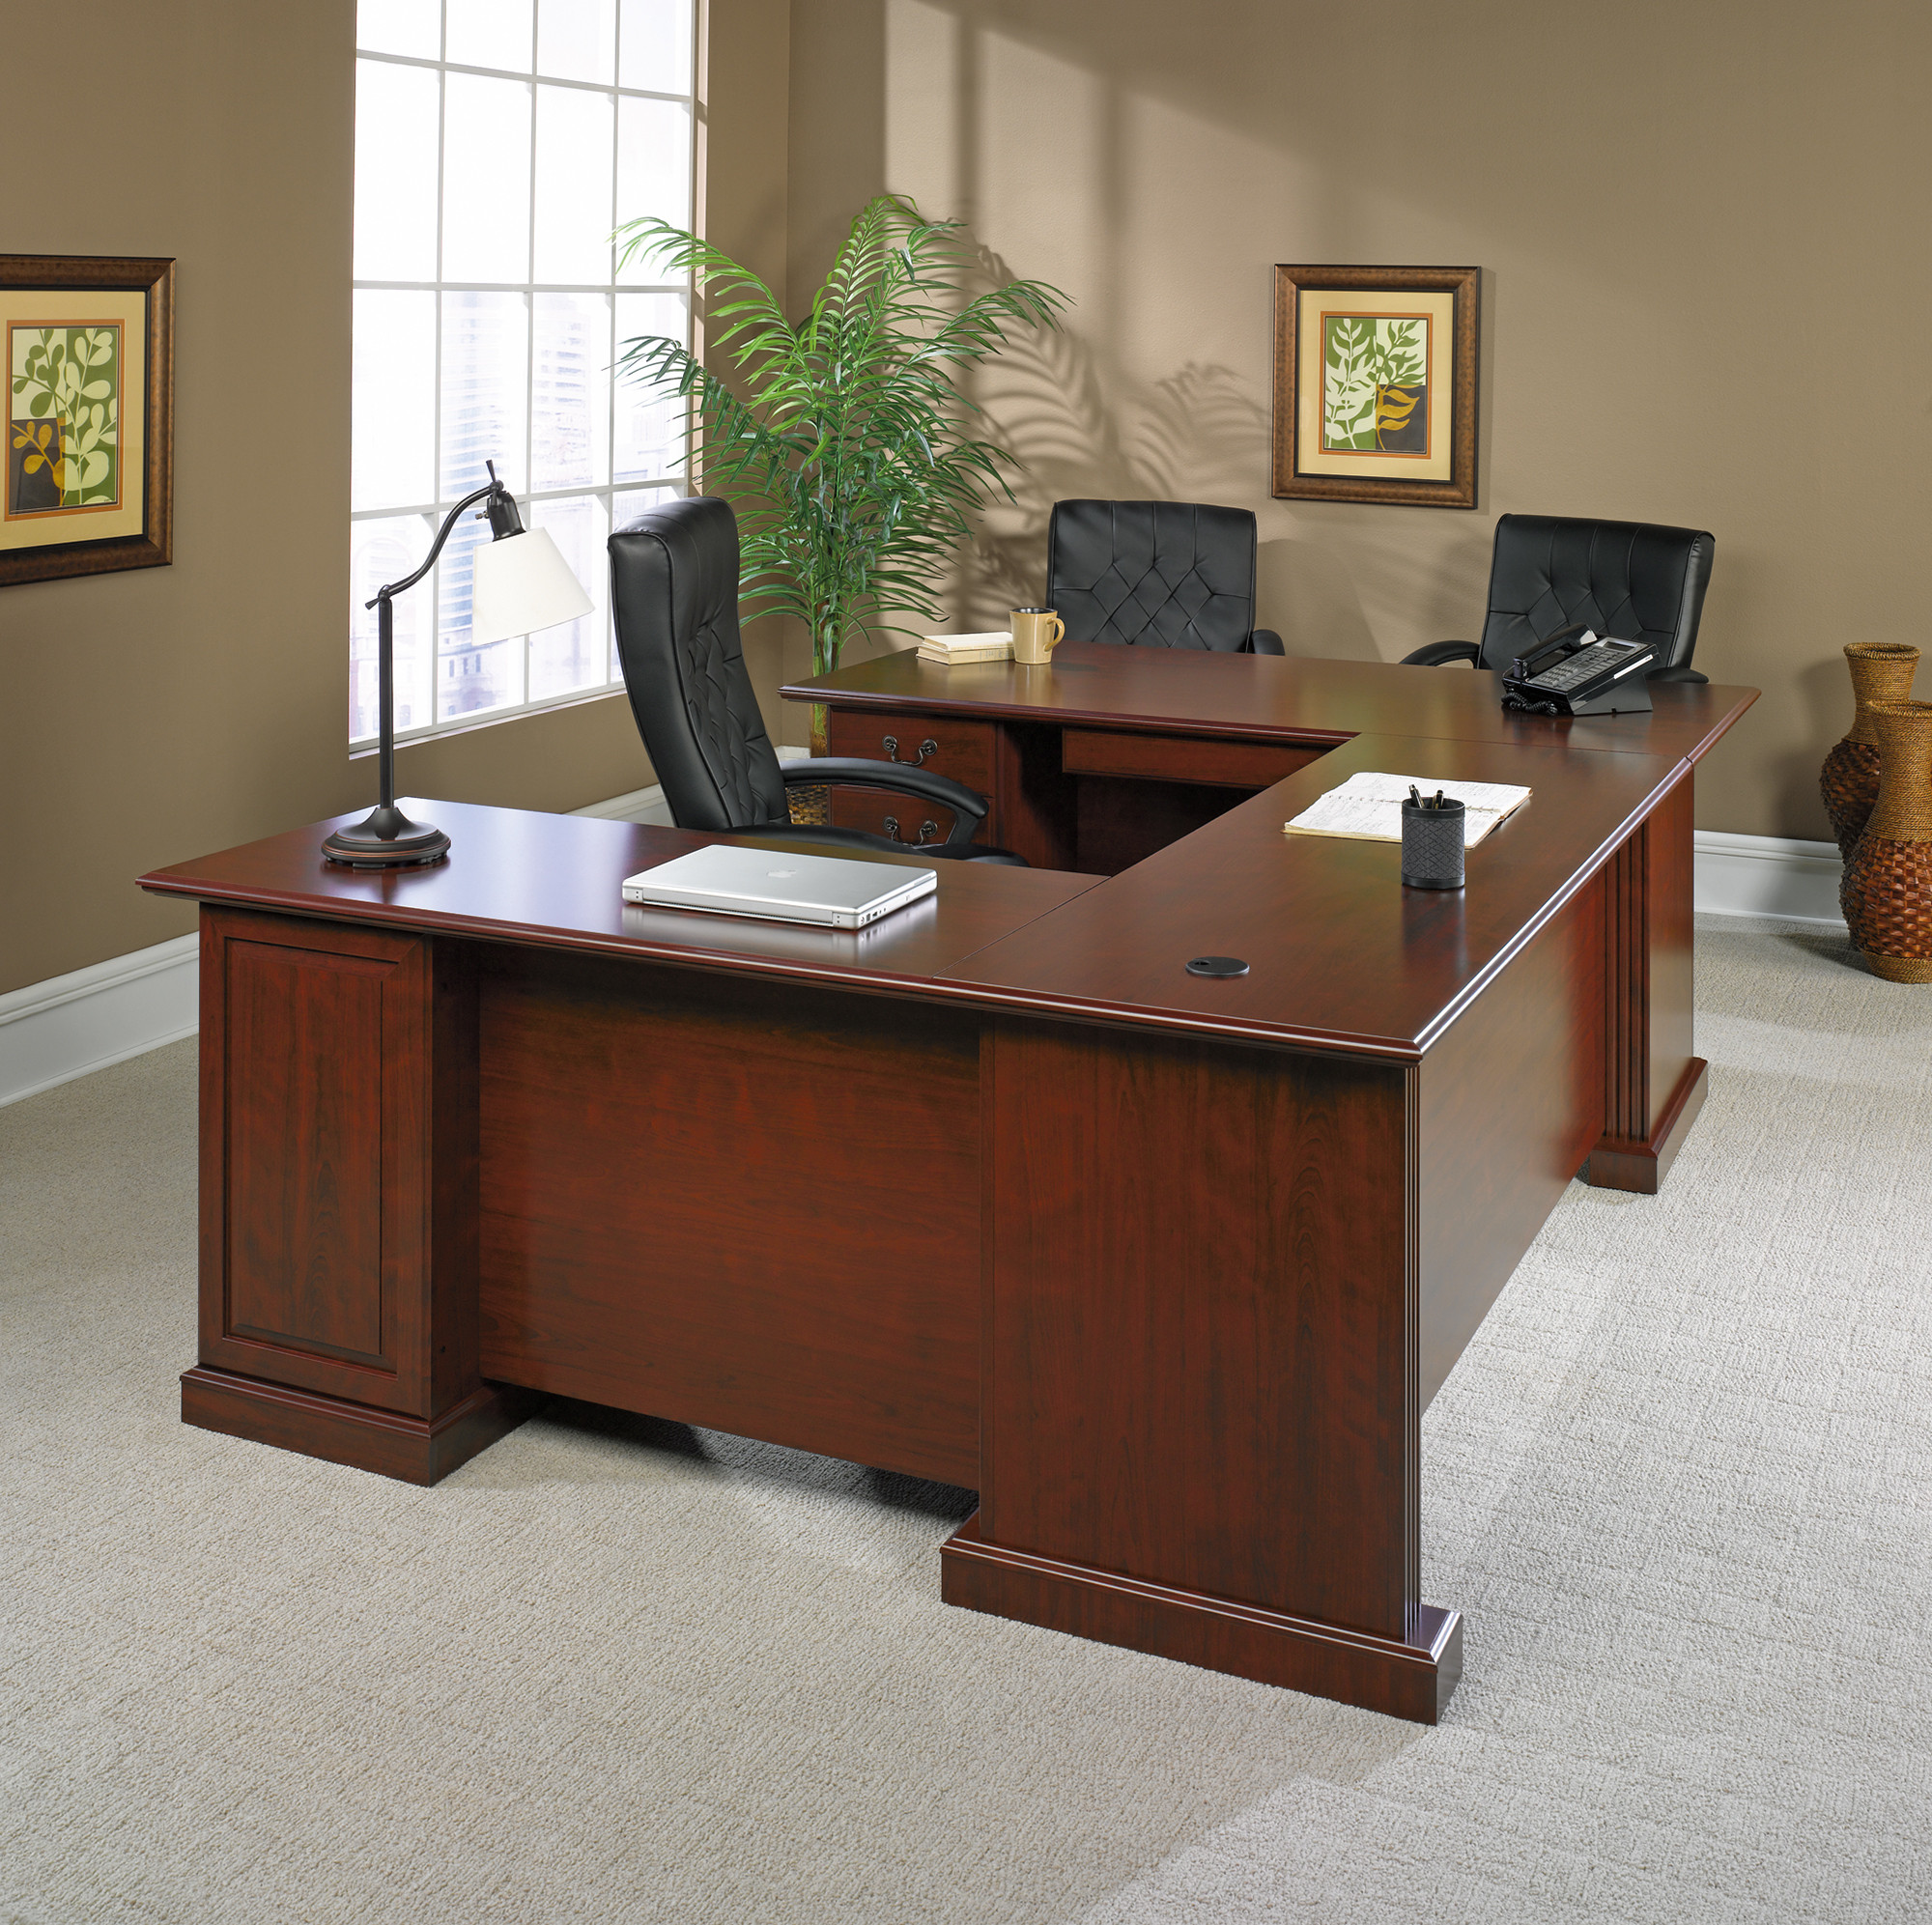 Best ideas about Office Furniture Sets
. Save or Pin Avoz Executive Desk Set Desks Scandinavian Designs Now.